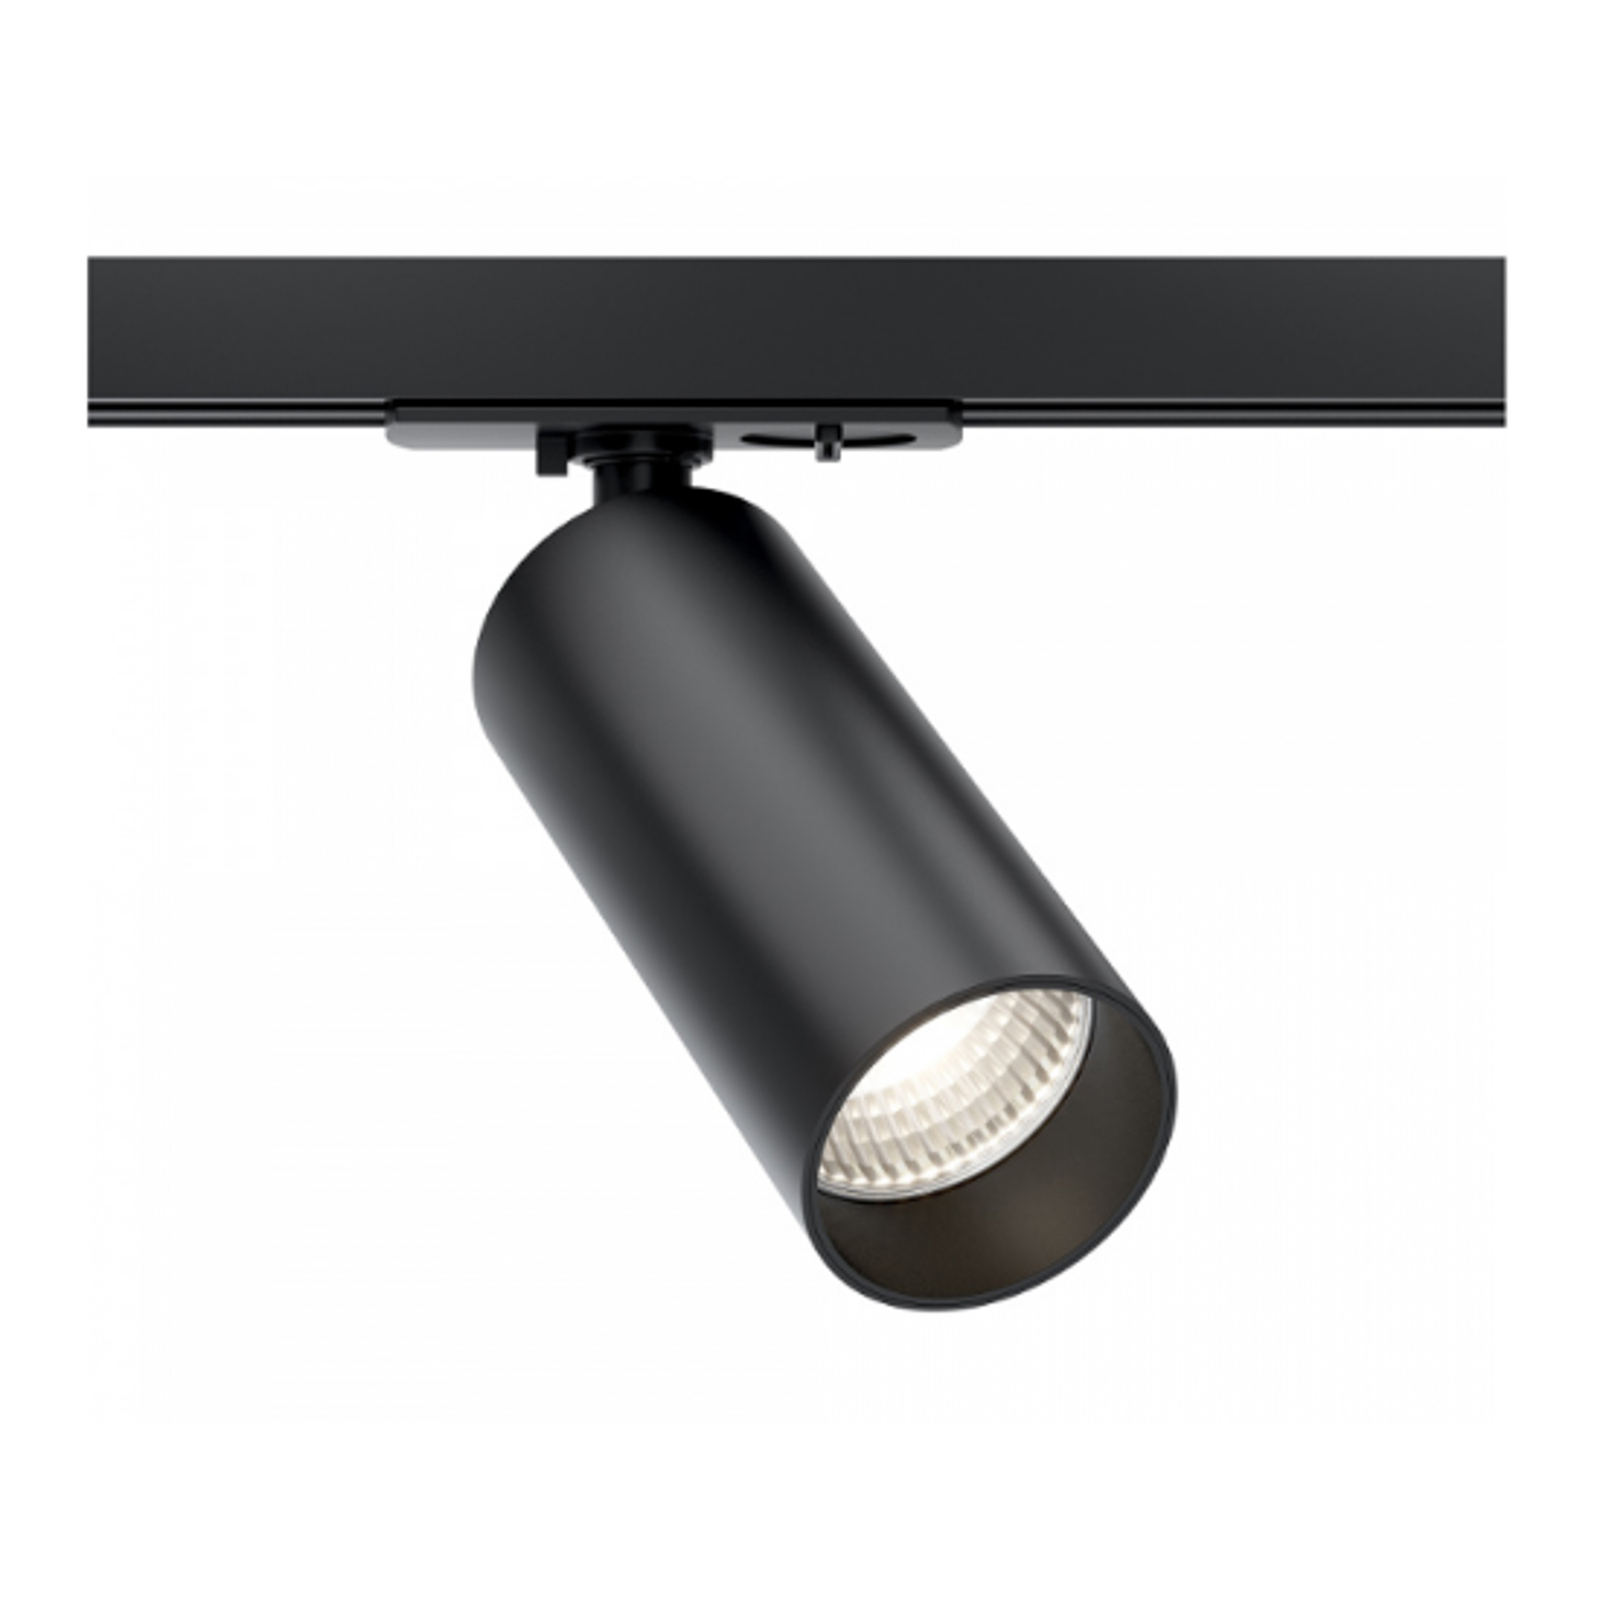 Maytoni Focus spot LED, système Unity, Triac, 930, noir